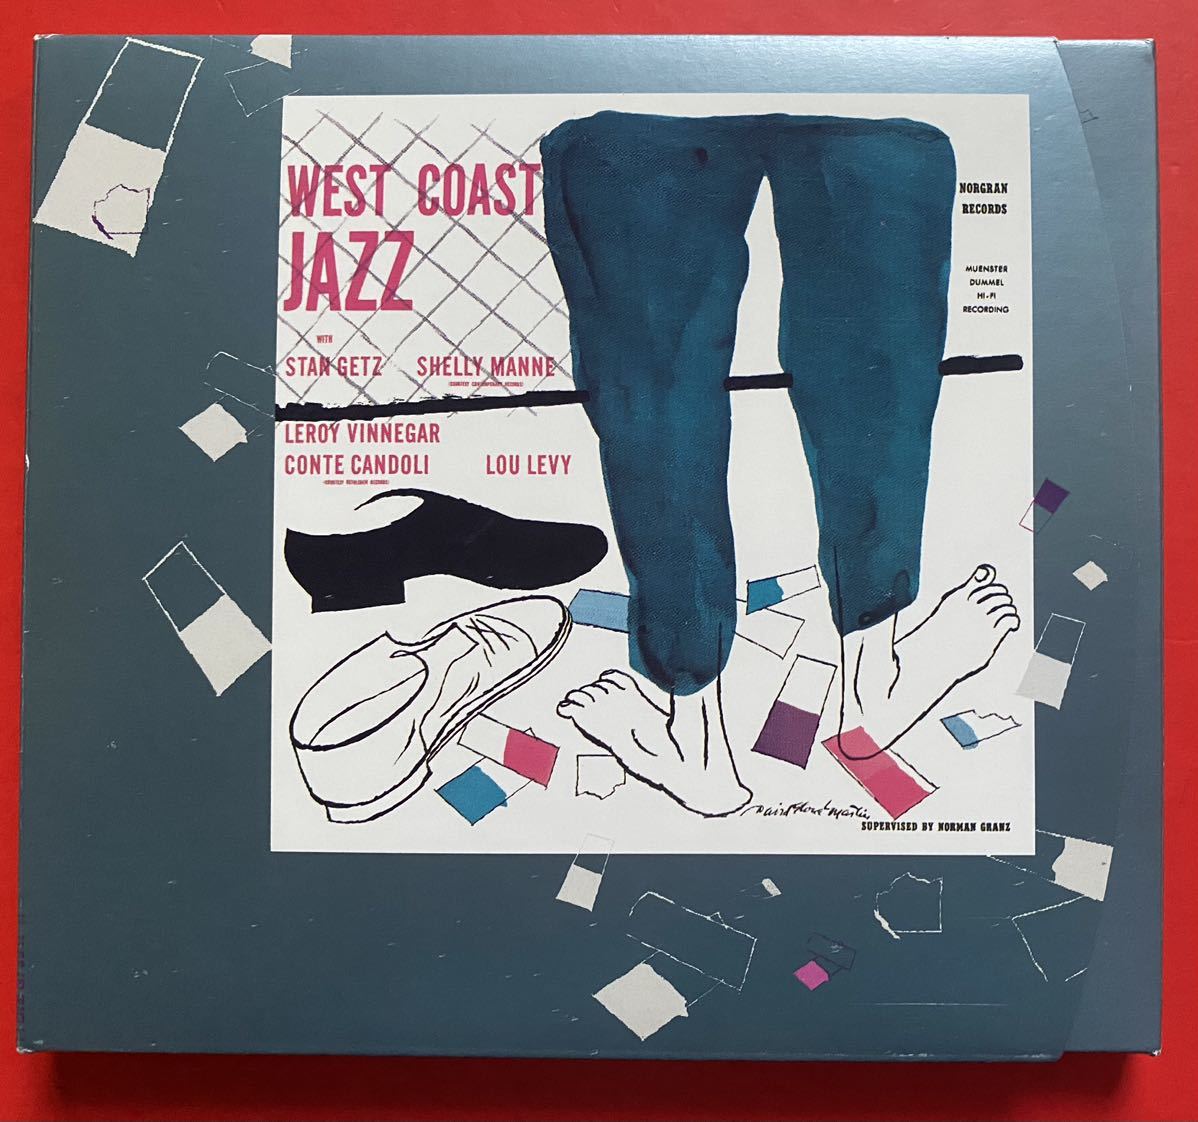 【CD】STAN GETZ「WEST COAST JAZZ +7」スタン・ゲッツ 輸入盤 ボーナストラックあり 盤面良好 [09030256]_画像1